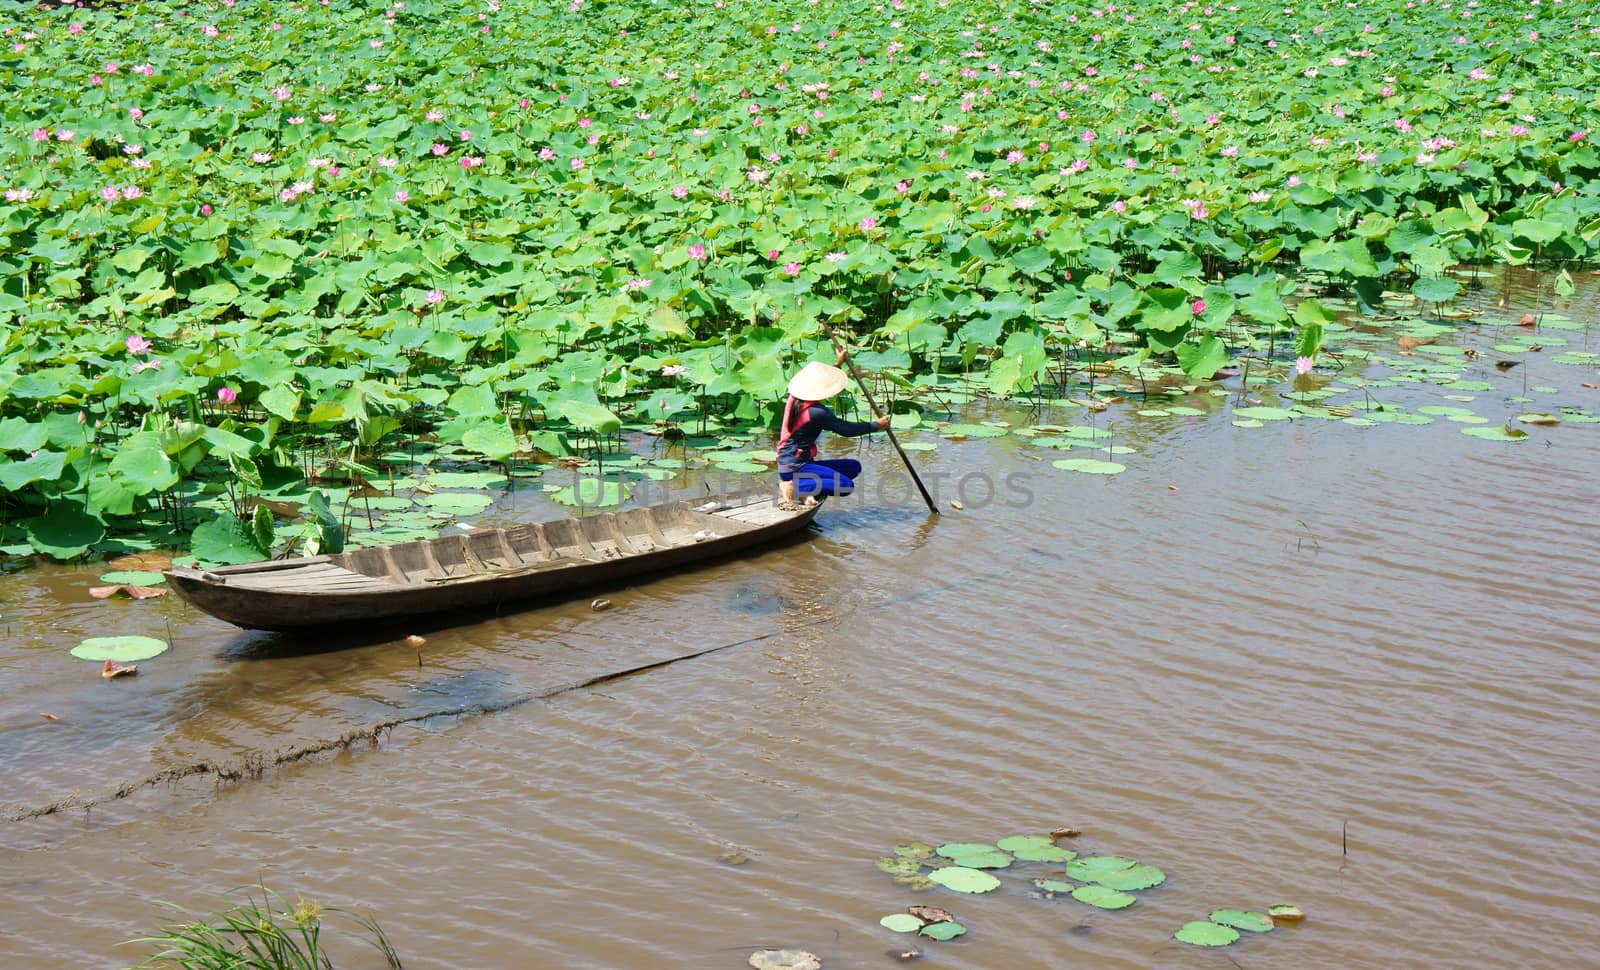 Vietnamese village, row boat, lotus flower, lotus pond by xuanhuongho